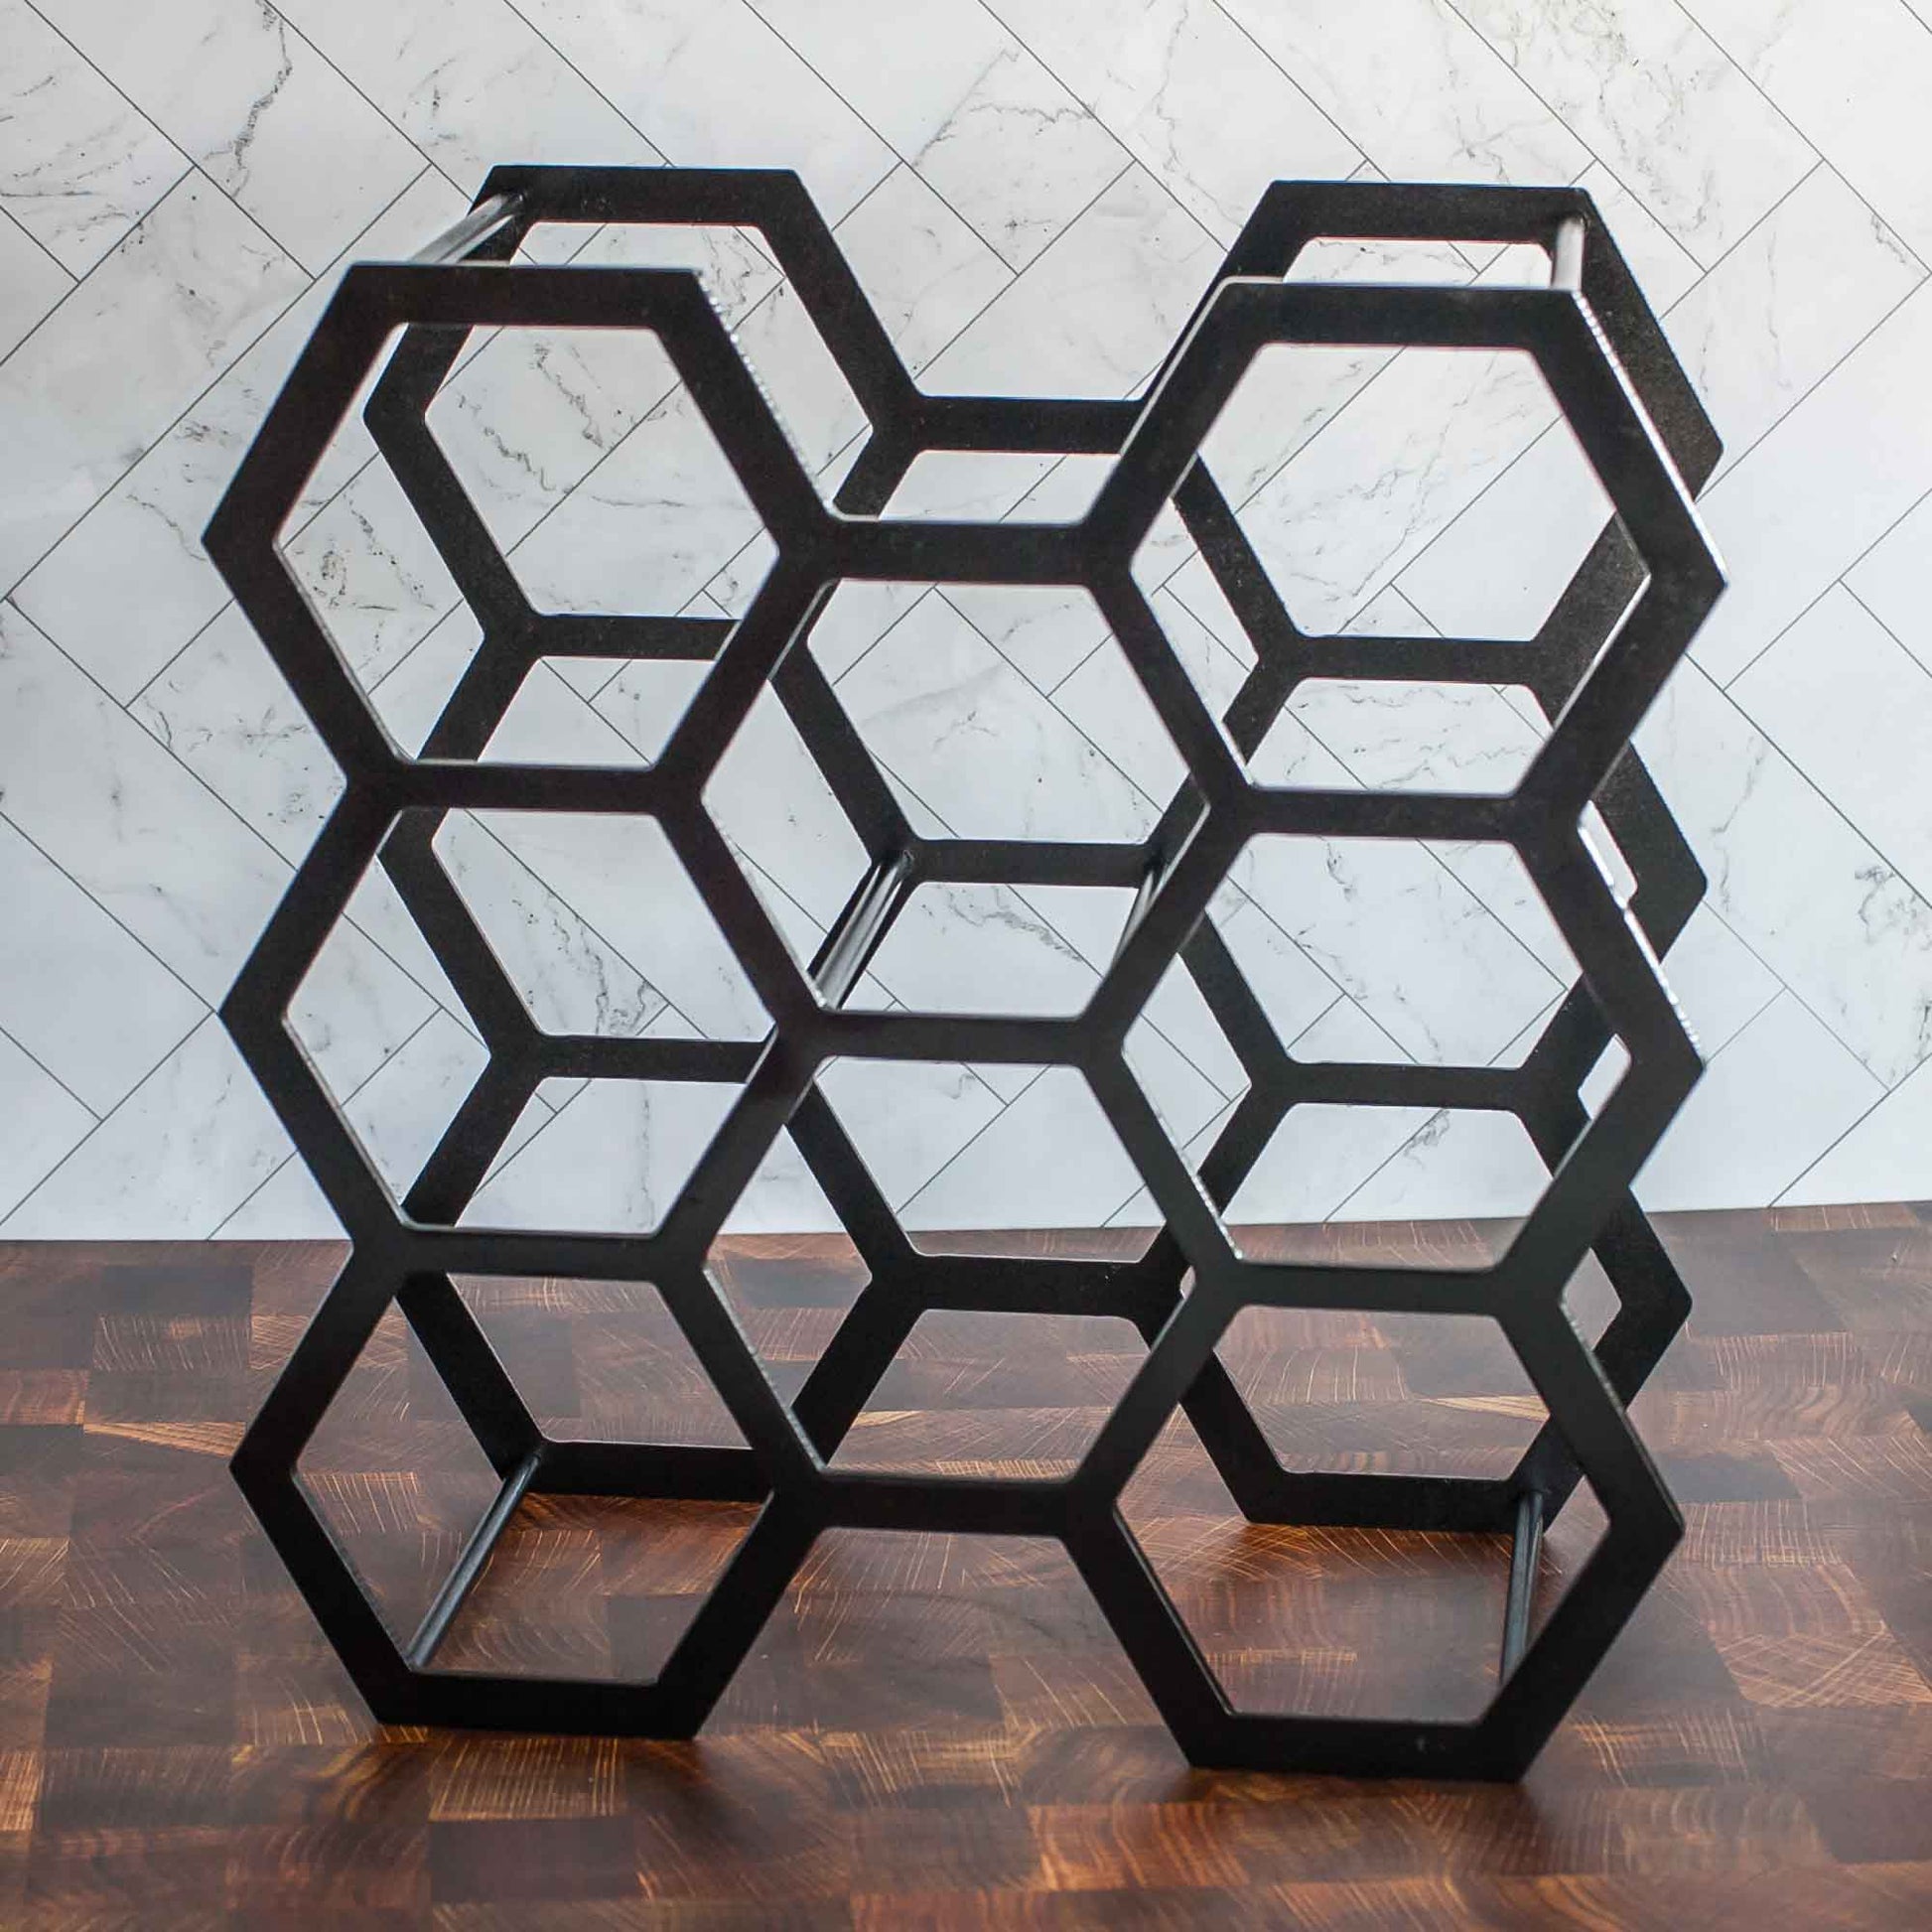 Metal Wine Rack - 8 Bottle Hexagon in Black - by LeeMo Designs in Bend, Oregon